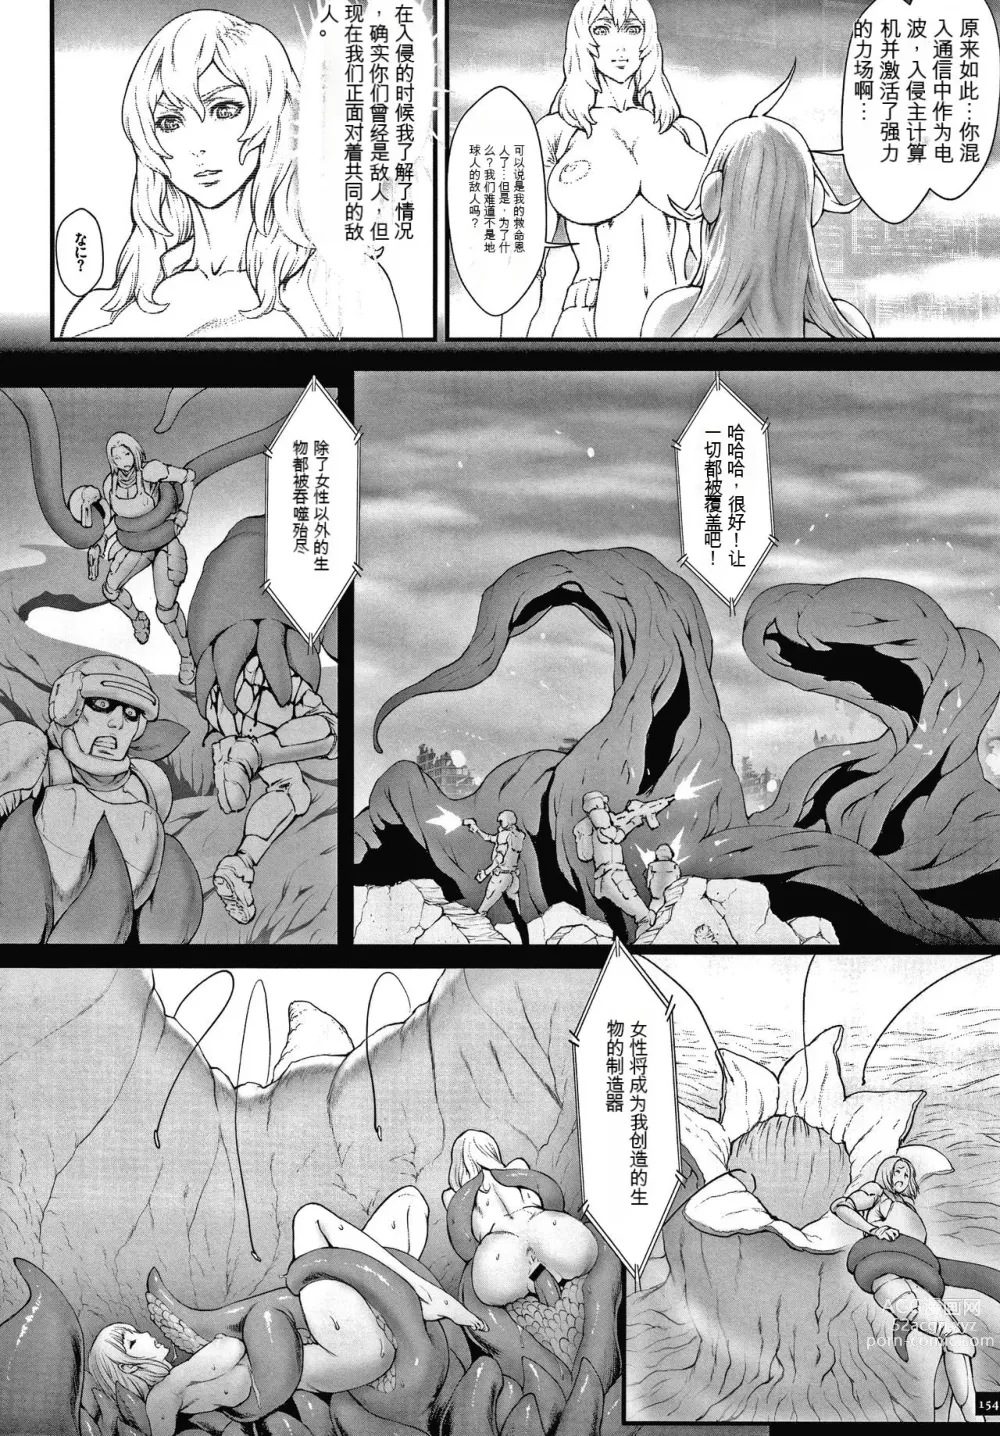 Page 155 of manga Haramase no Hoshi - STAR OF STALLION